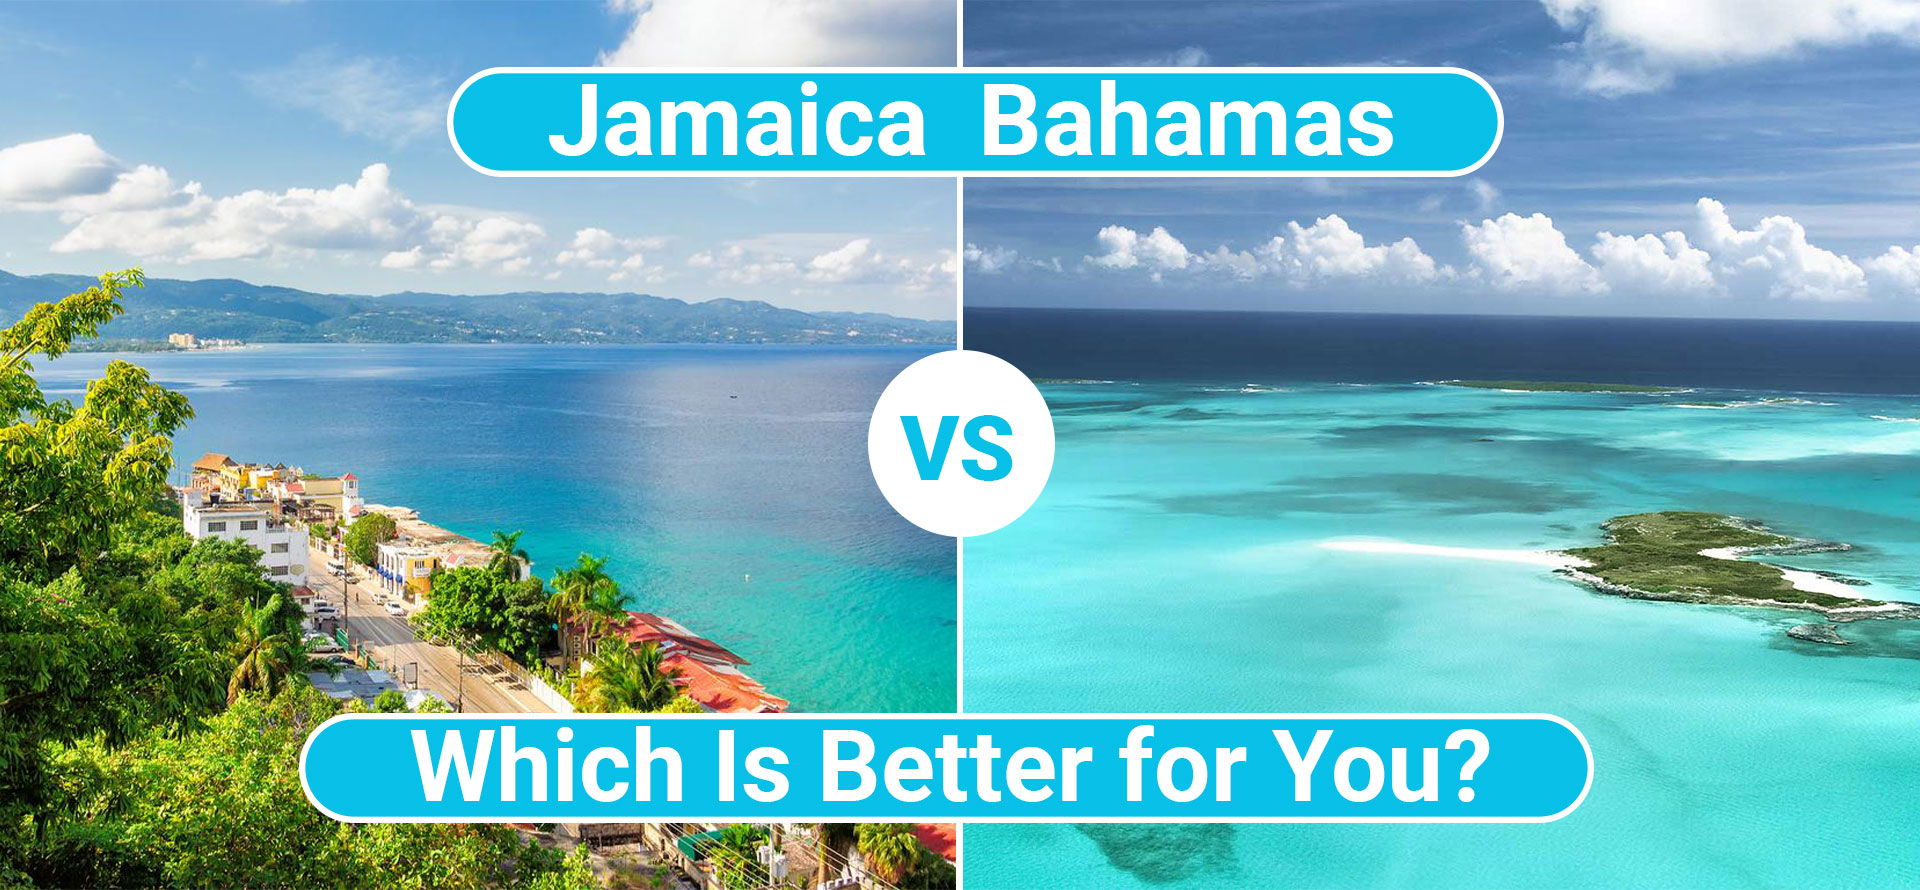 Jamaica vs bahamas.